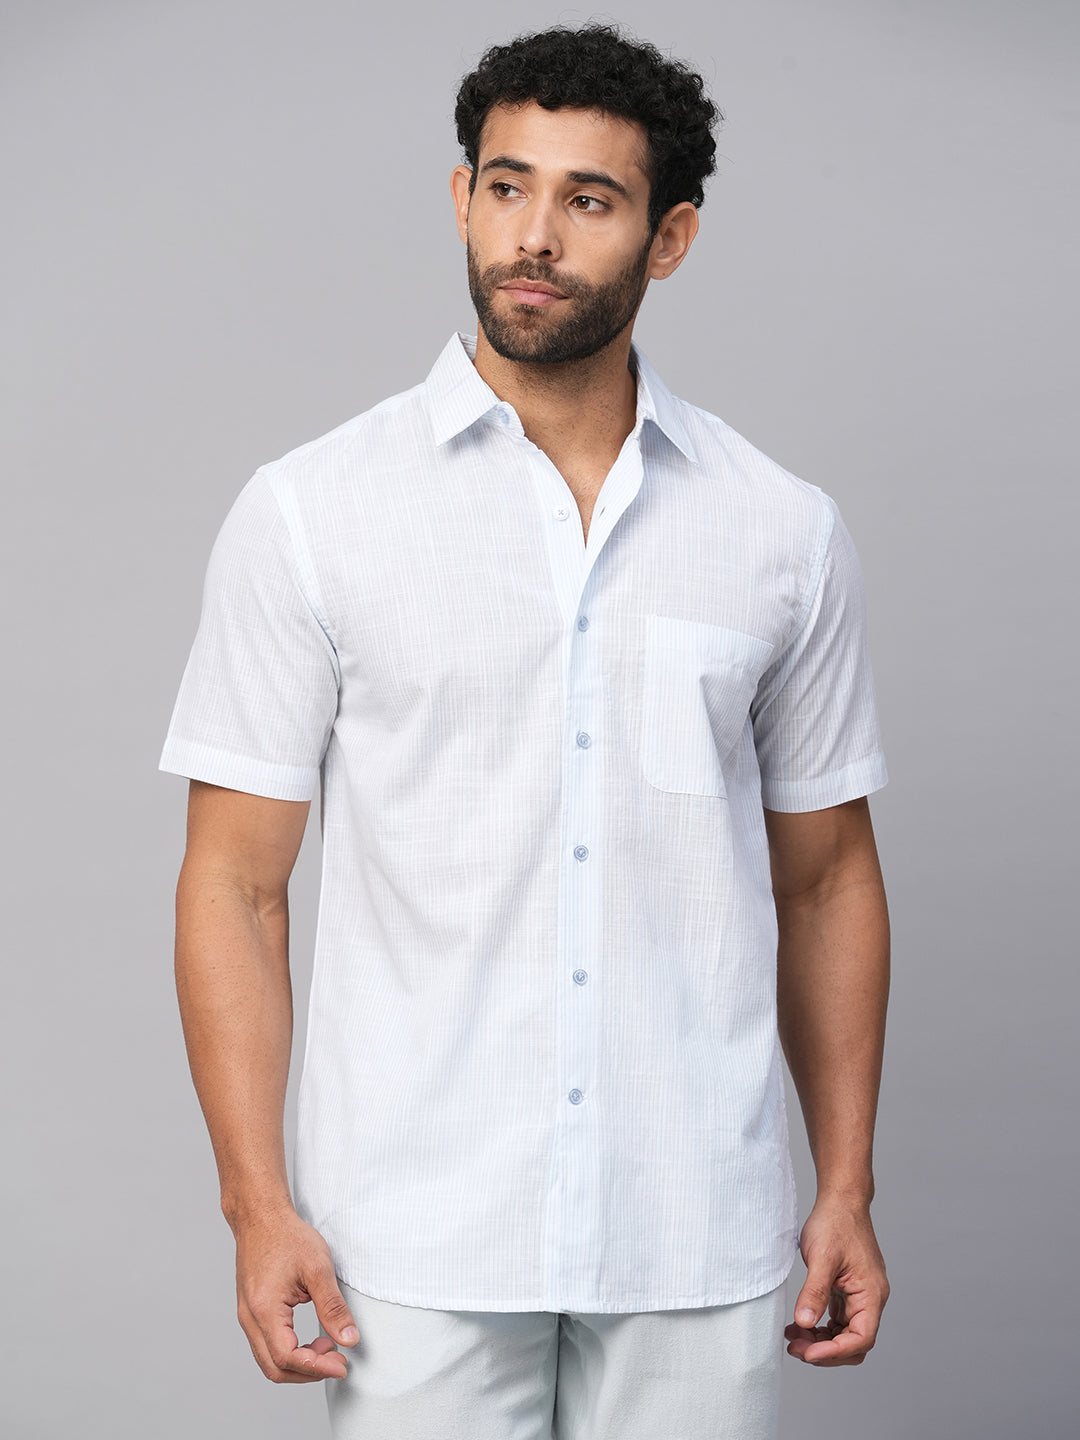 Men's Cotton White/Sky Regular Fit Shirt